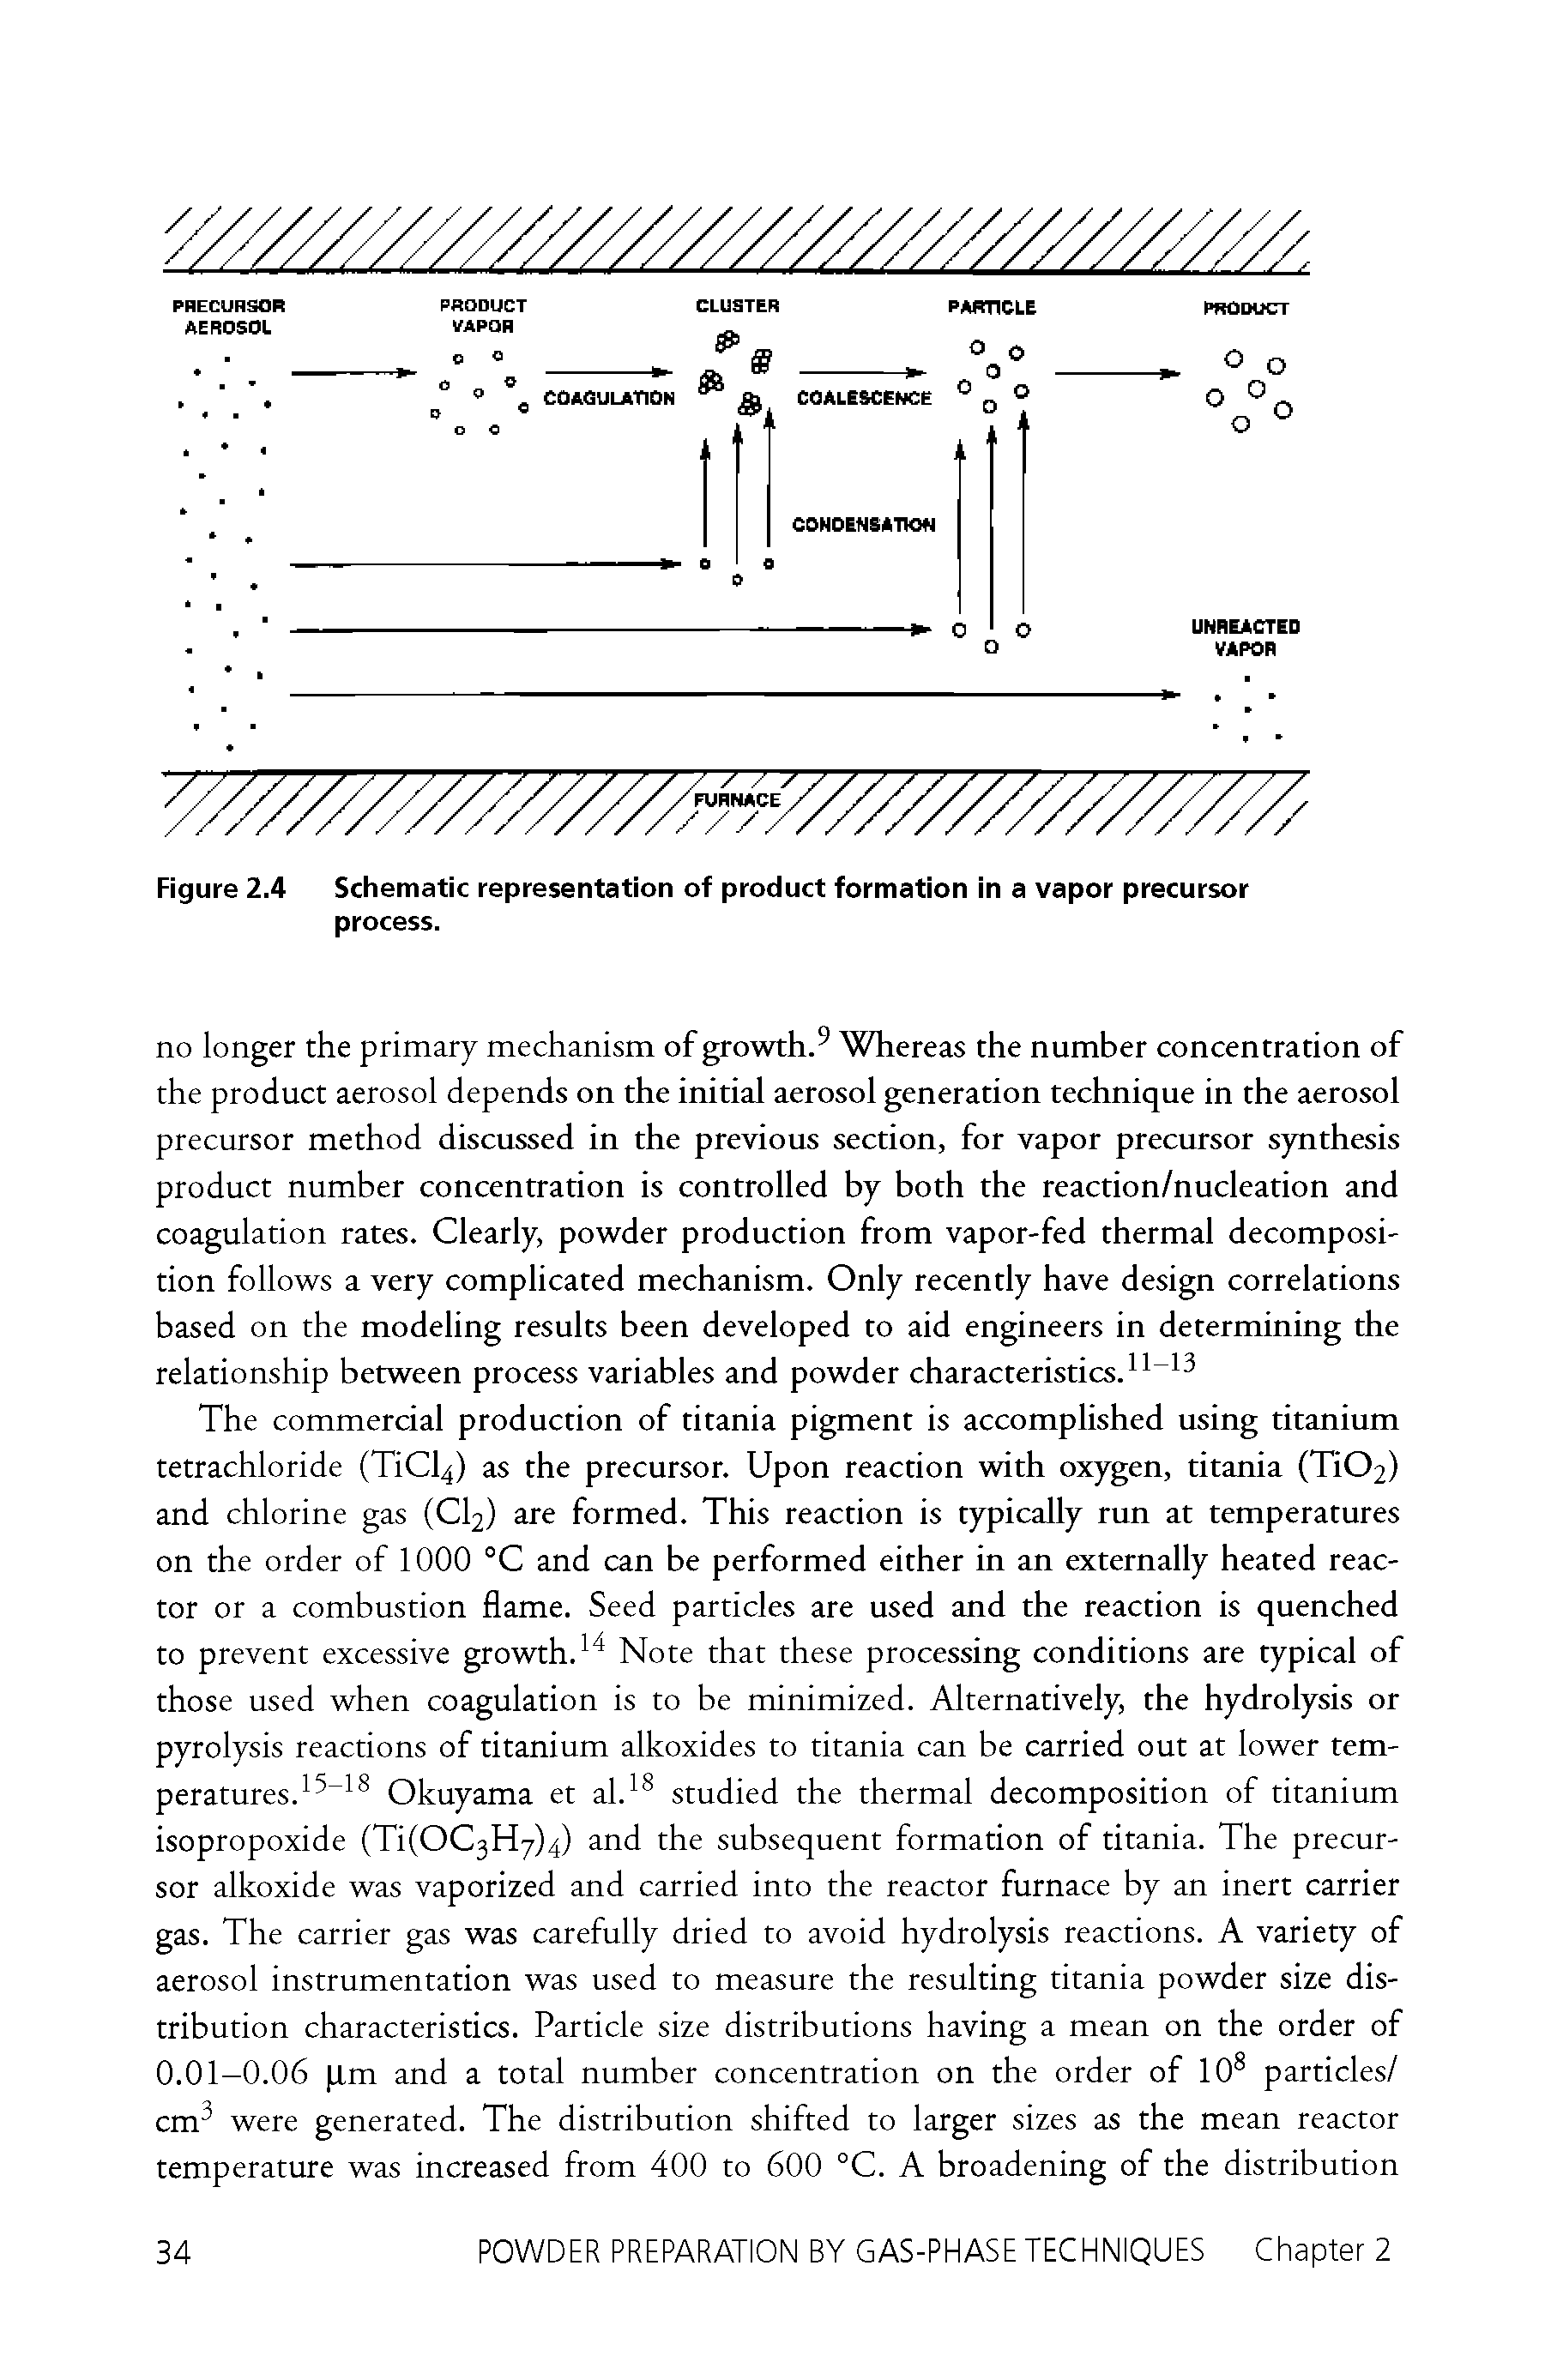 Figure 2.4 Schematic representation of product formation in a vapor precursor process.